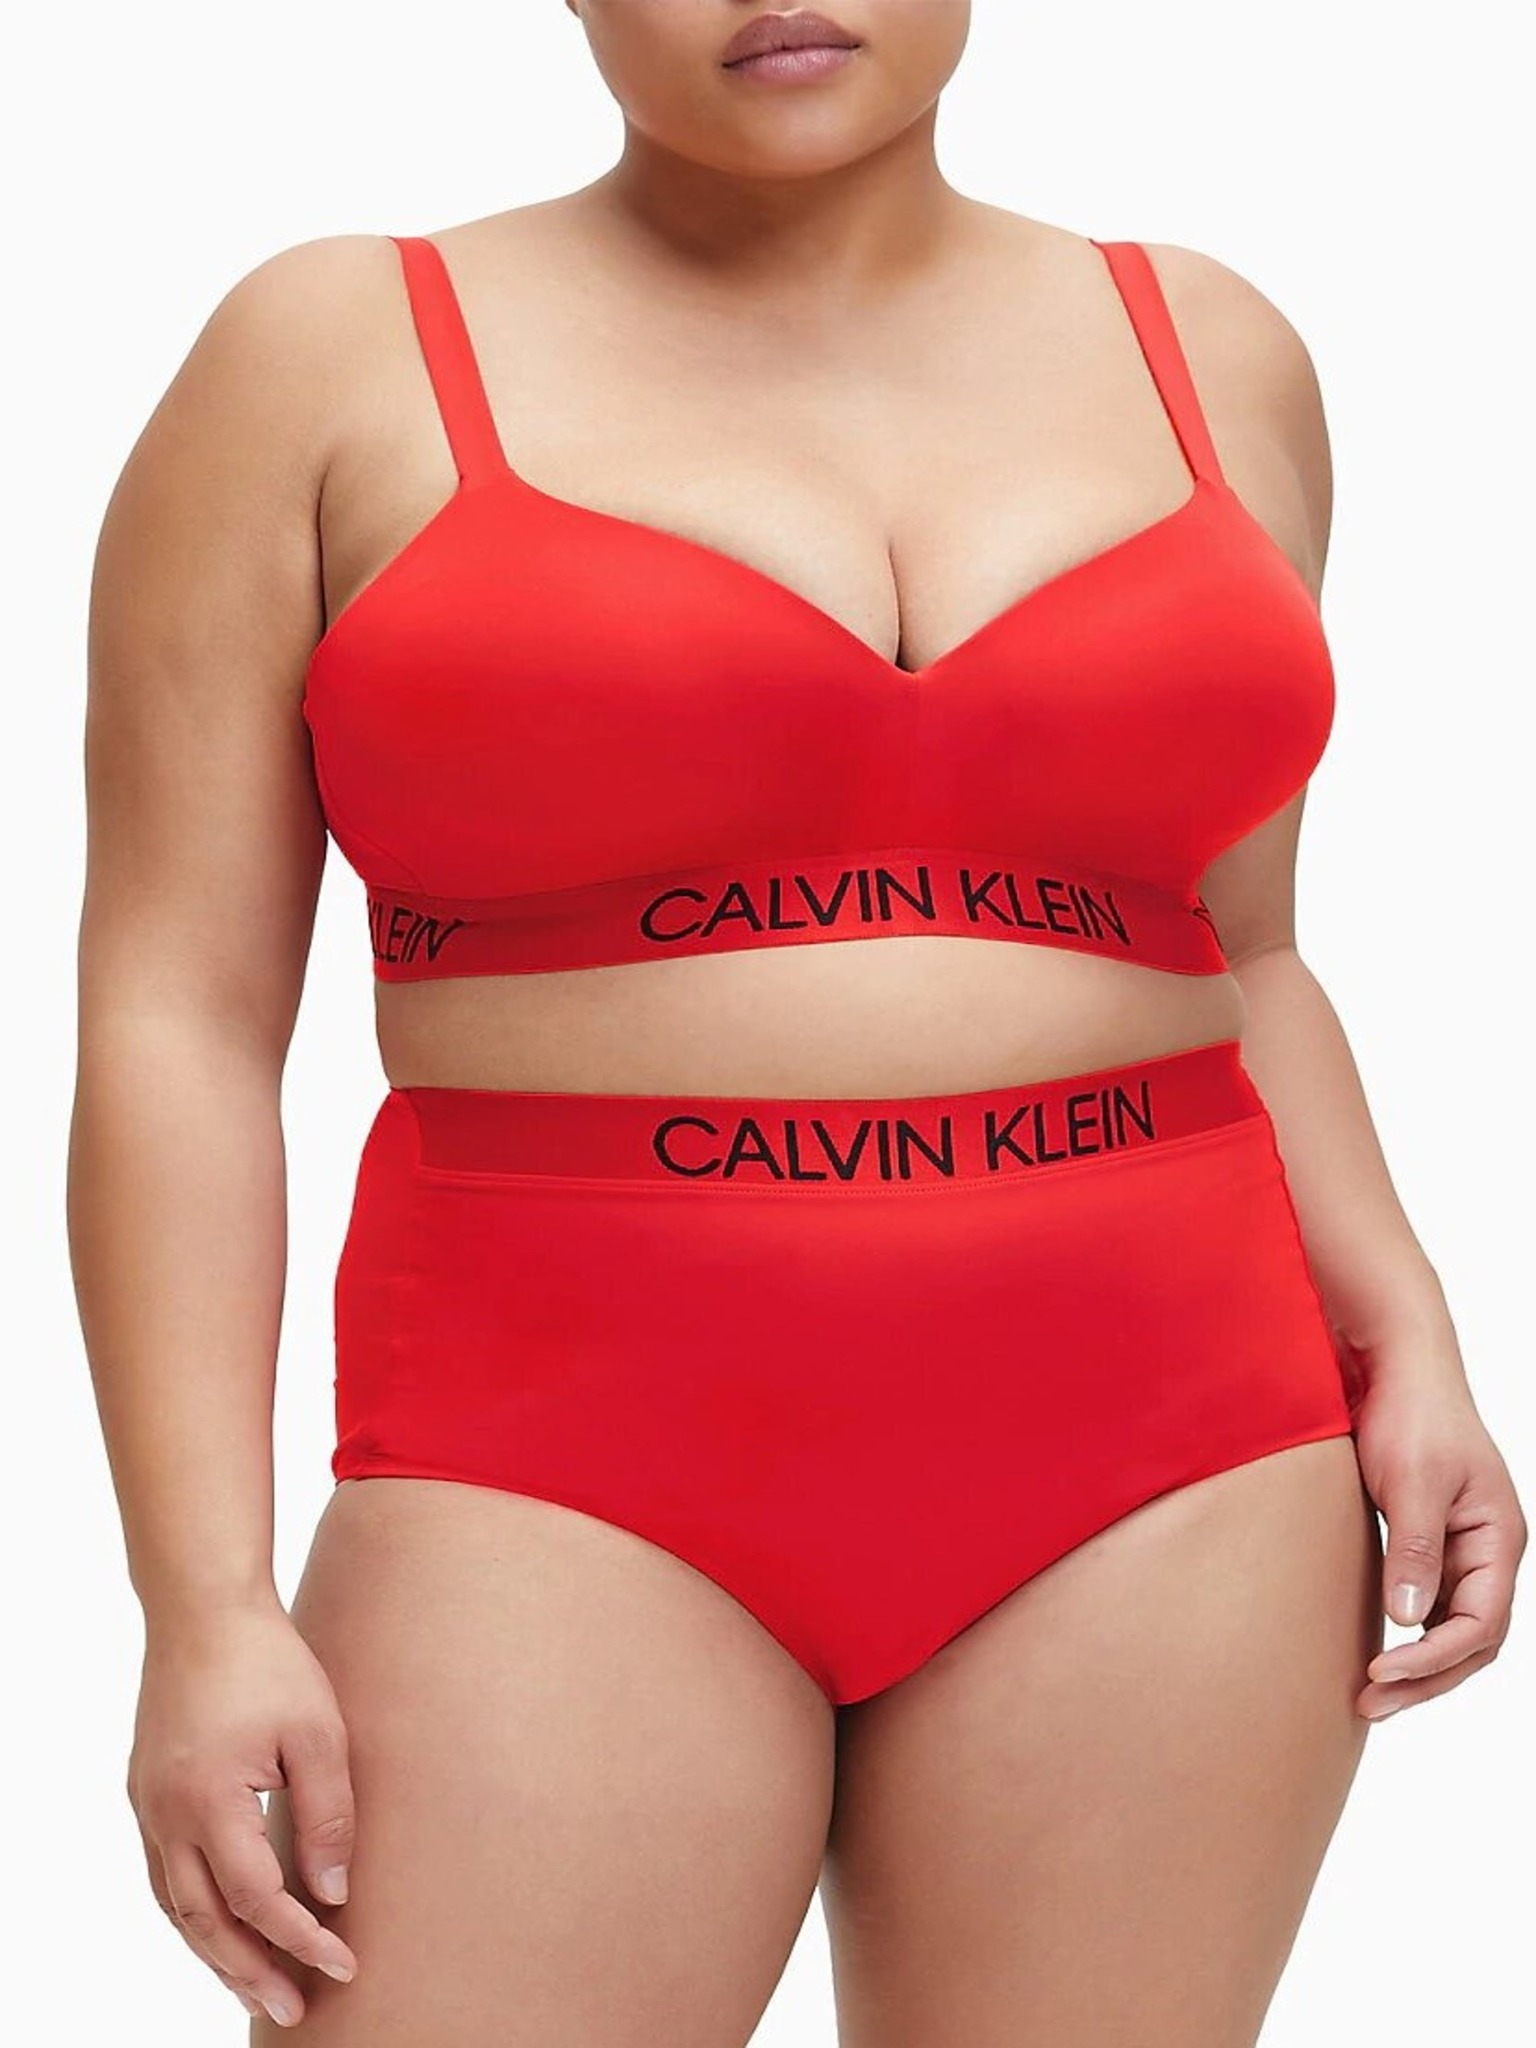 Calvin Klein - Demi Bralette Plus Size High Risk Red Bikini top